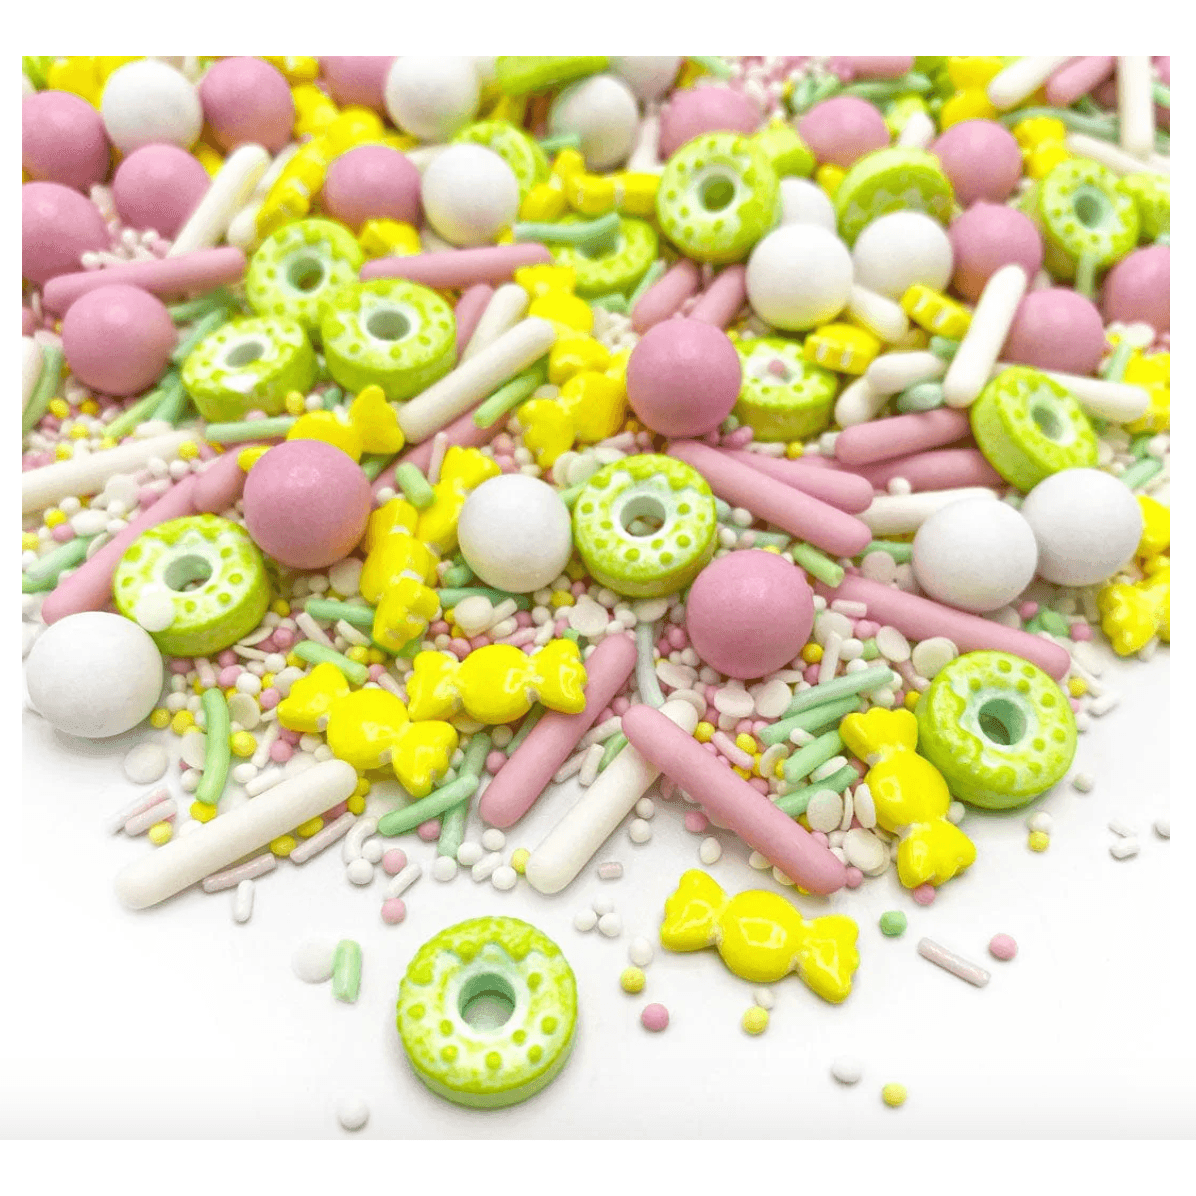 Happy Sprinkles - Donut Worry 90g - Patissland